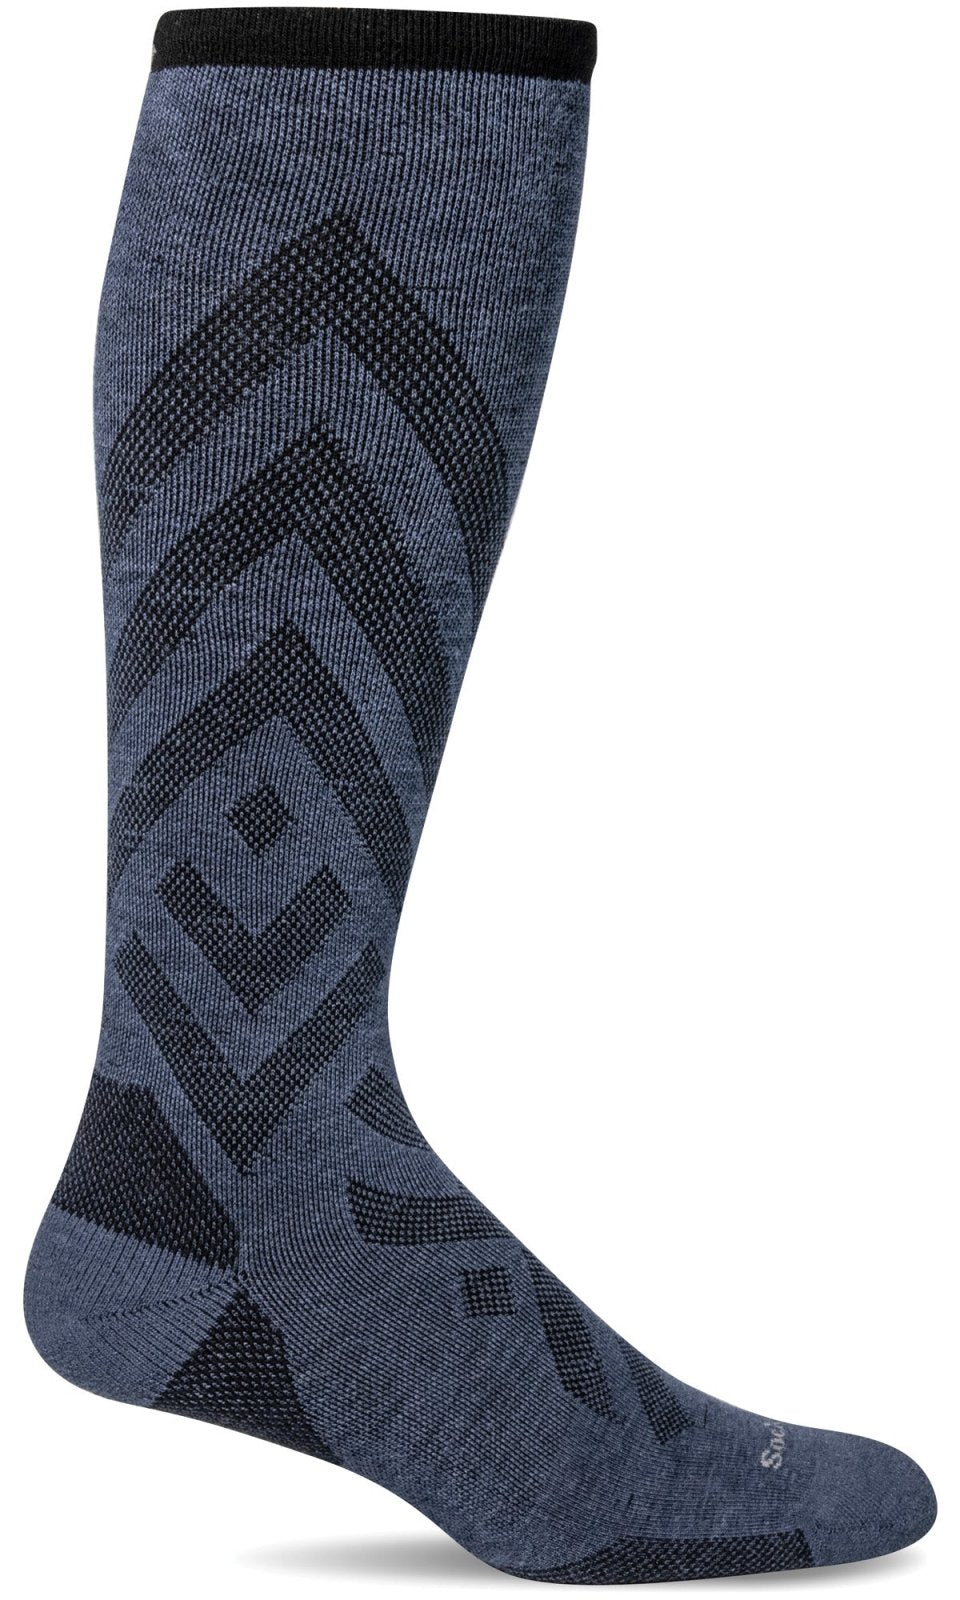 Men's Surge | Firm Graduated Compression Socks - Merino Wool Sport Compression - Sockwell